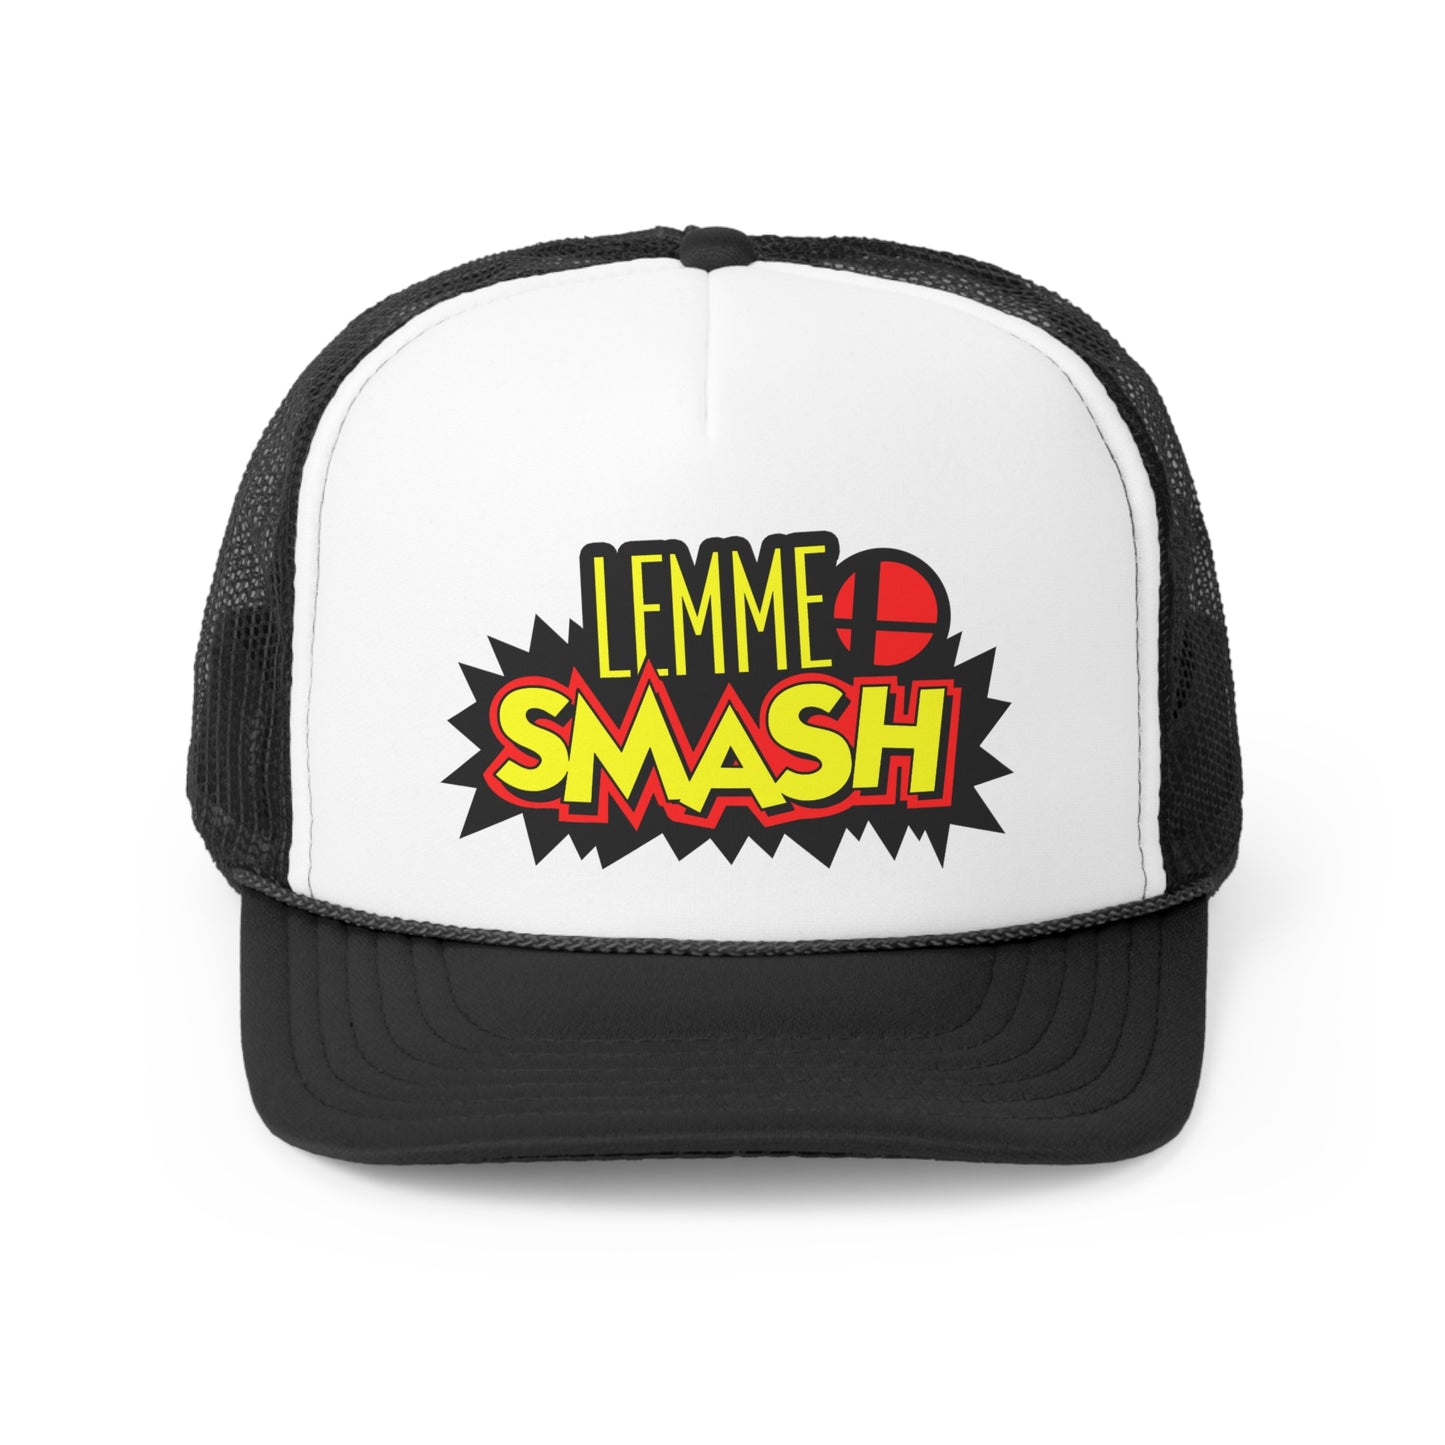 Lemme Smash trucker hat